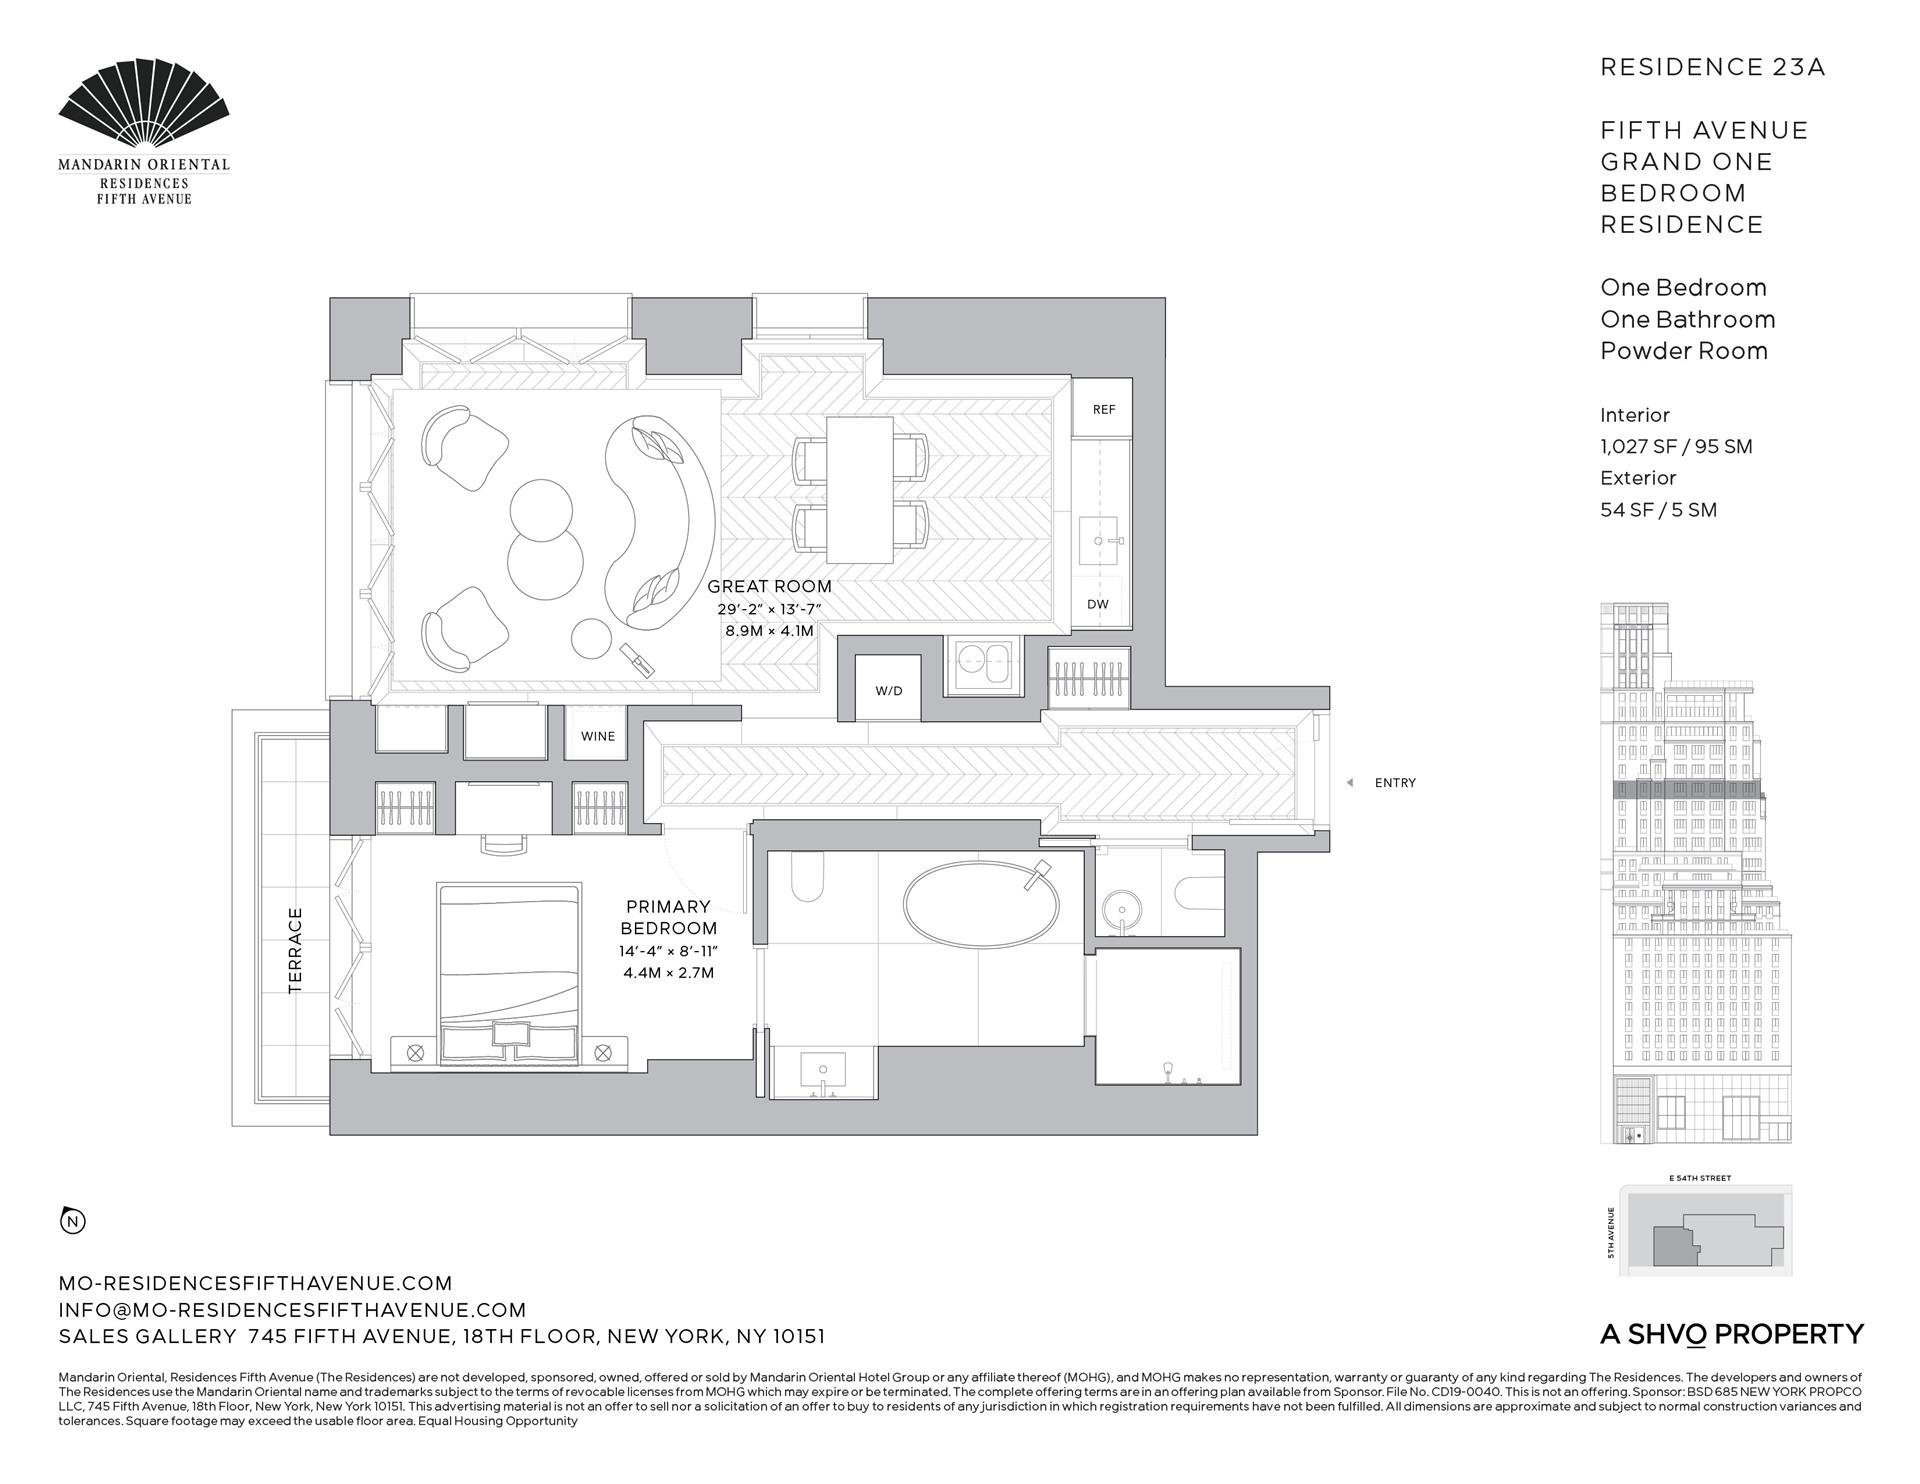 Floorplan for 685 5th Avenue, 23A